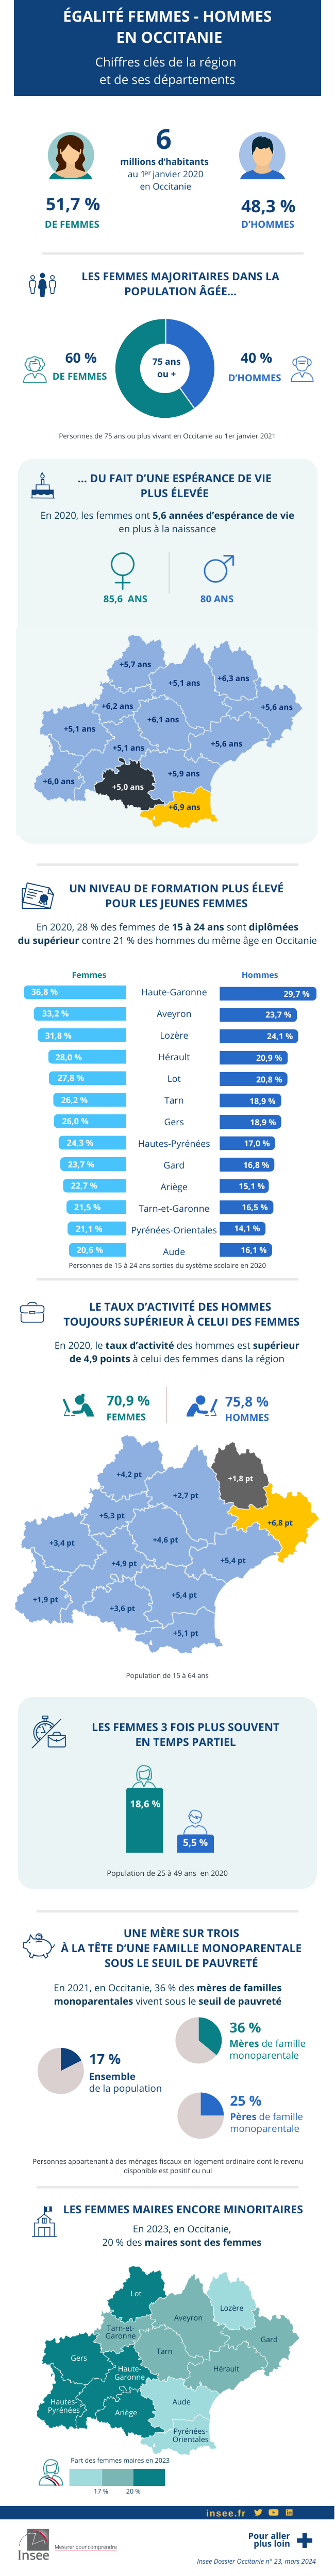 Égalité femmes-hommes en Occitanie